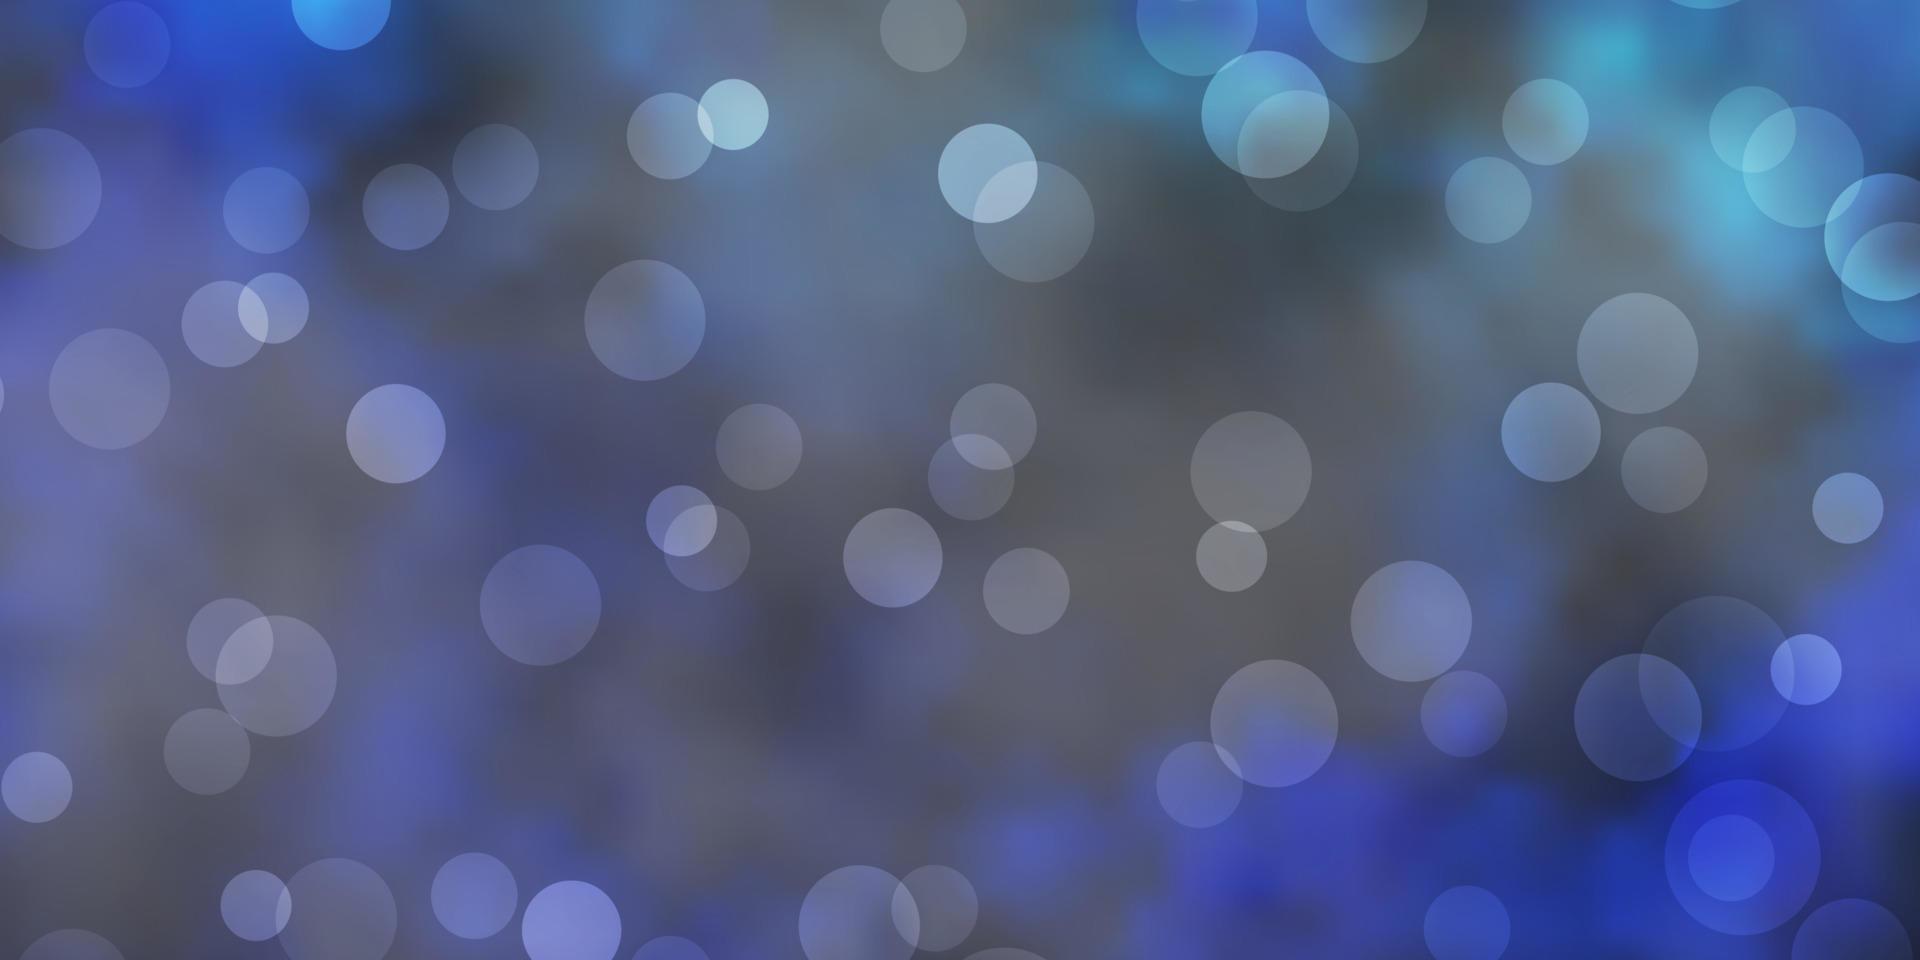 Dark BLUE vector backdrop with dots.